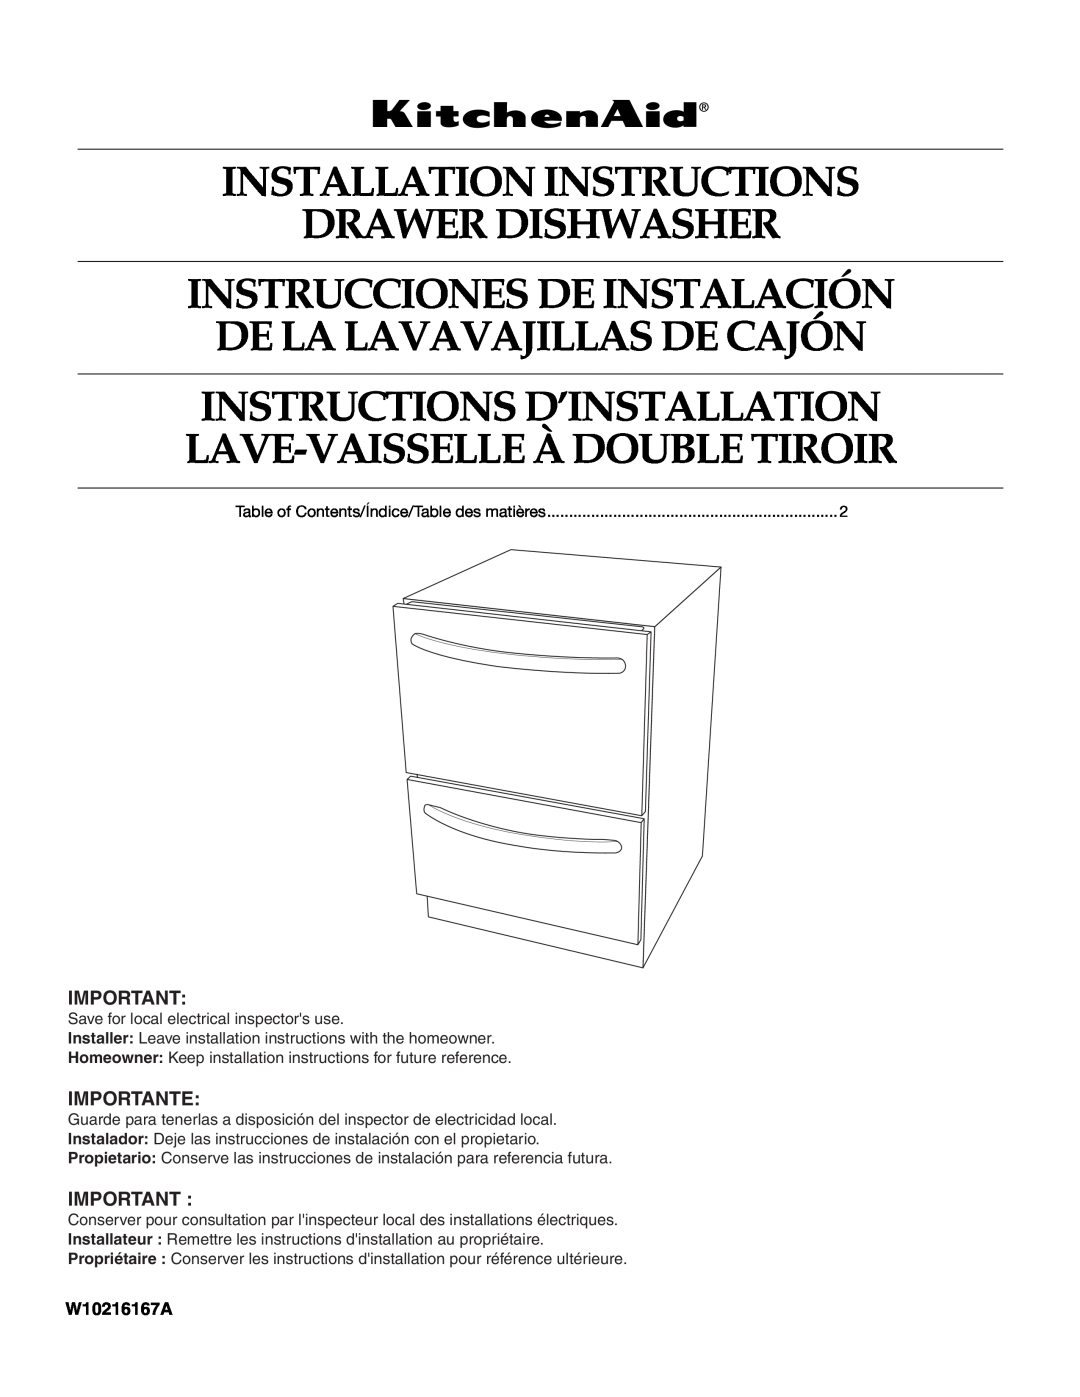 KitchenAid W10216167A installation instructions Installation Instructions Drawer Dishwasher, Importante 